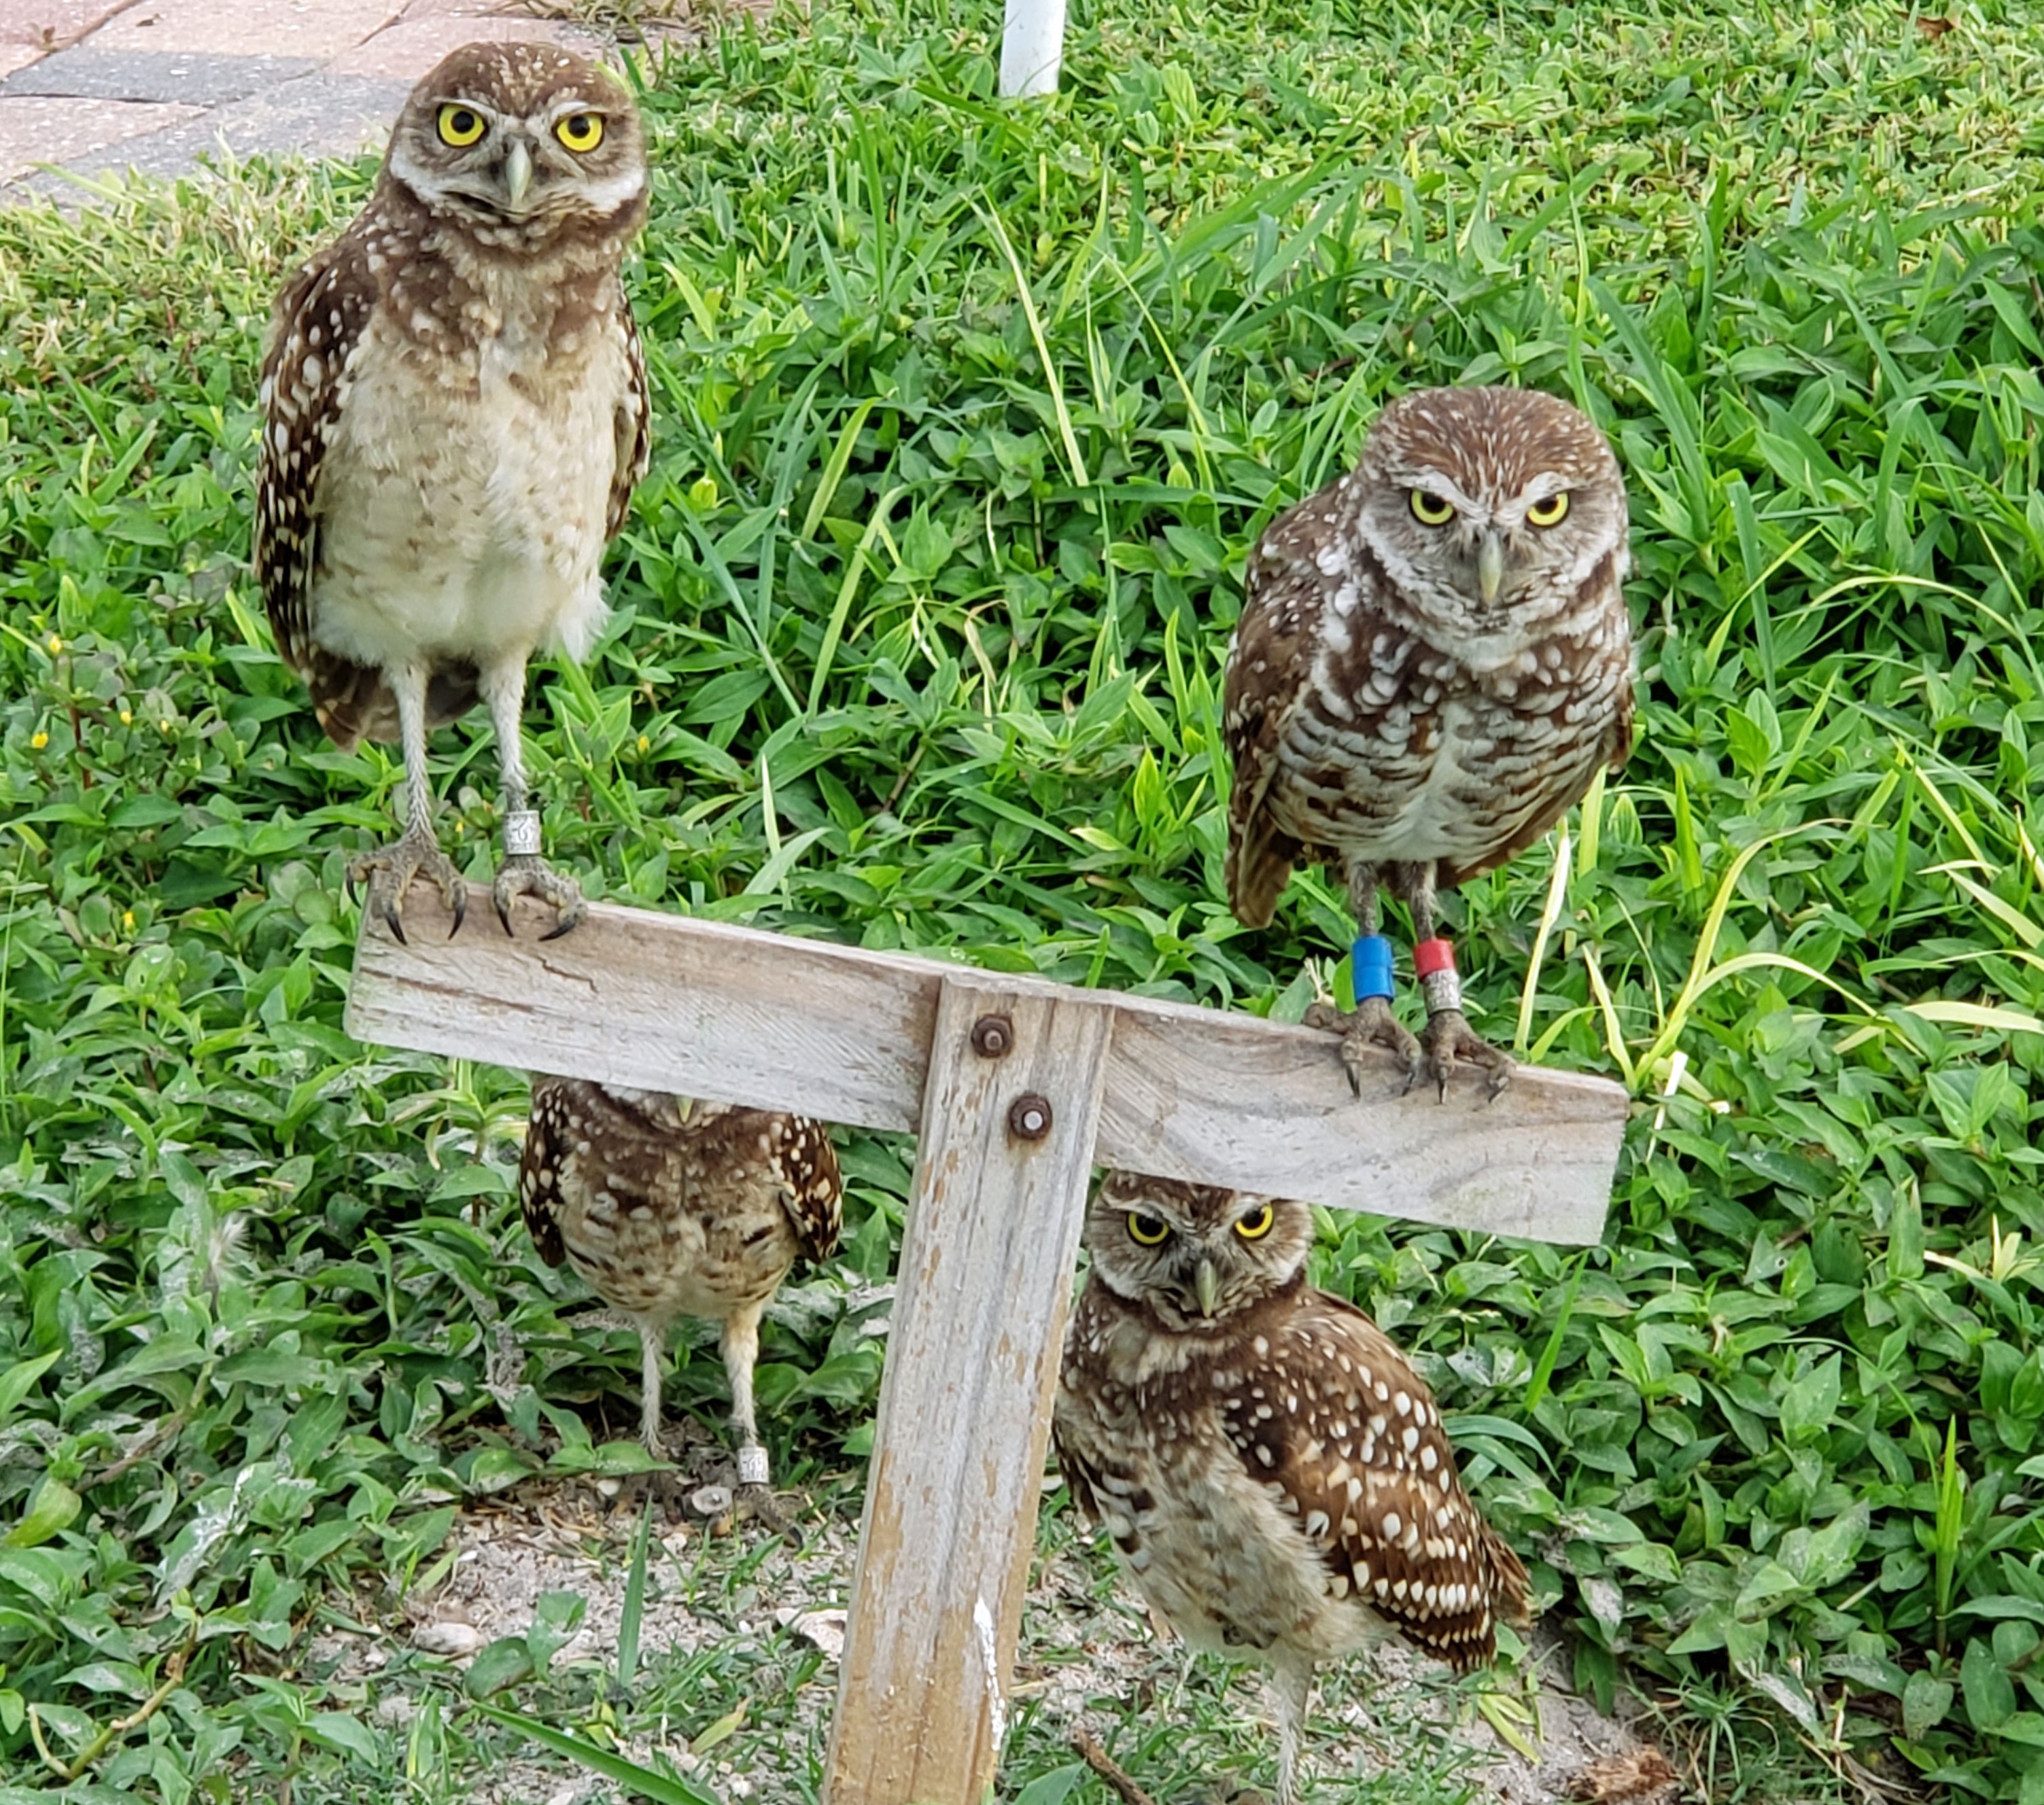 Owls by their home&conn=none